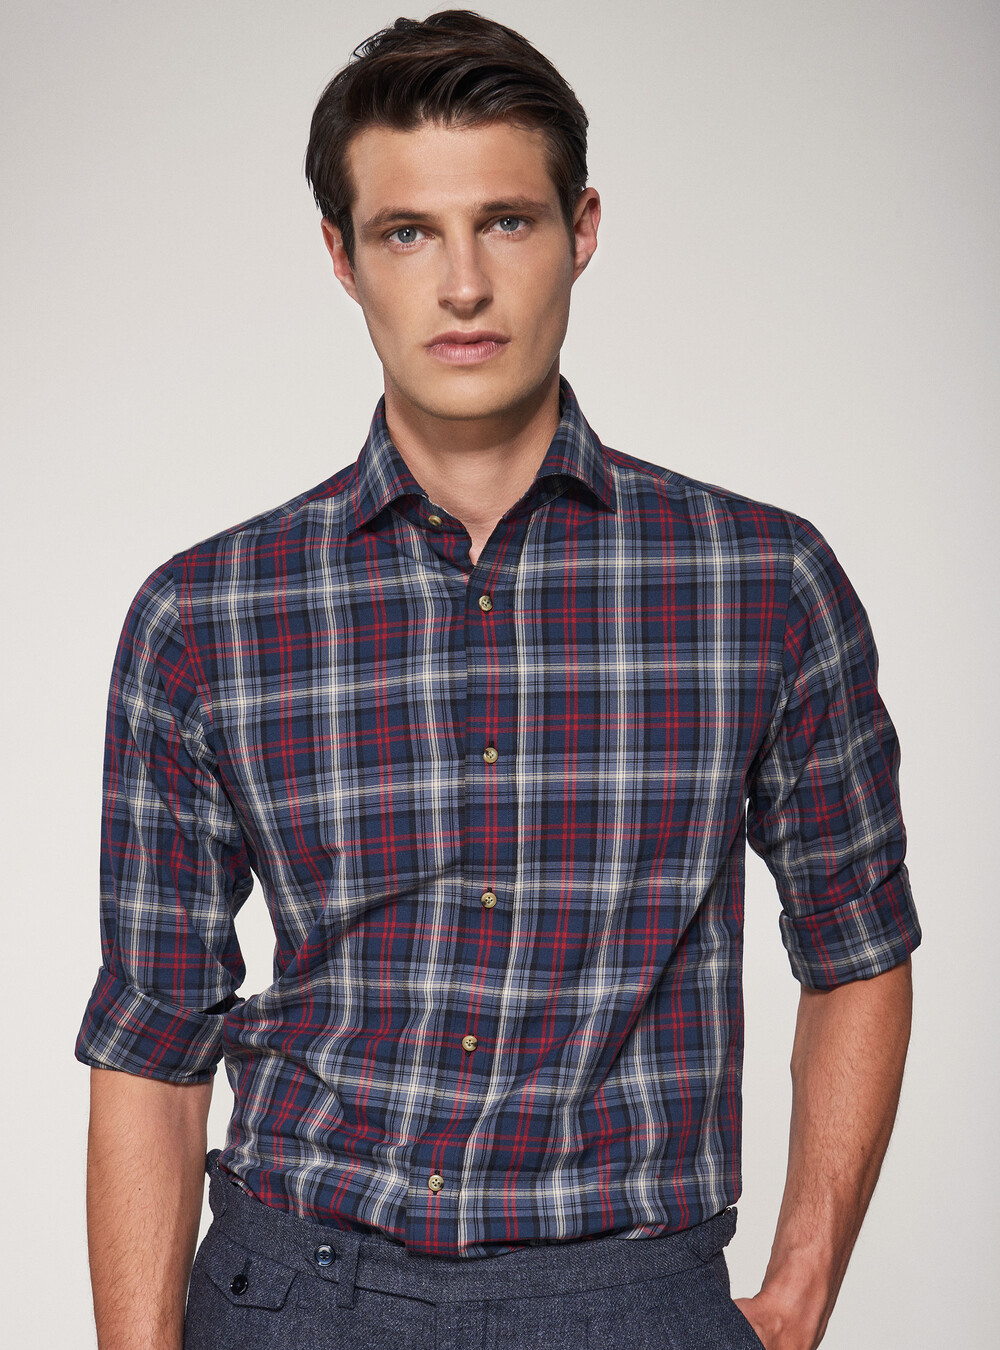 Plaid flannel shirt | GutteridgeUS | Men's catalog-gutteridge-storefront